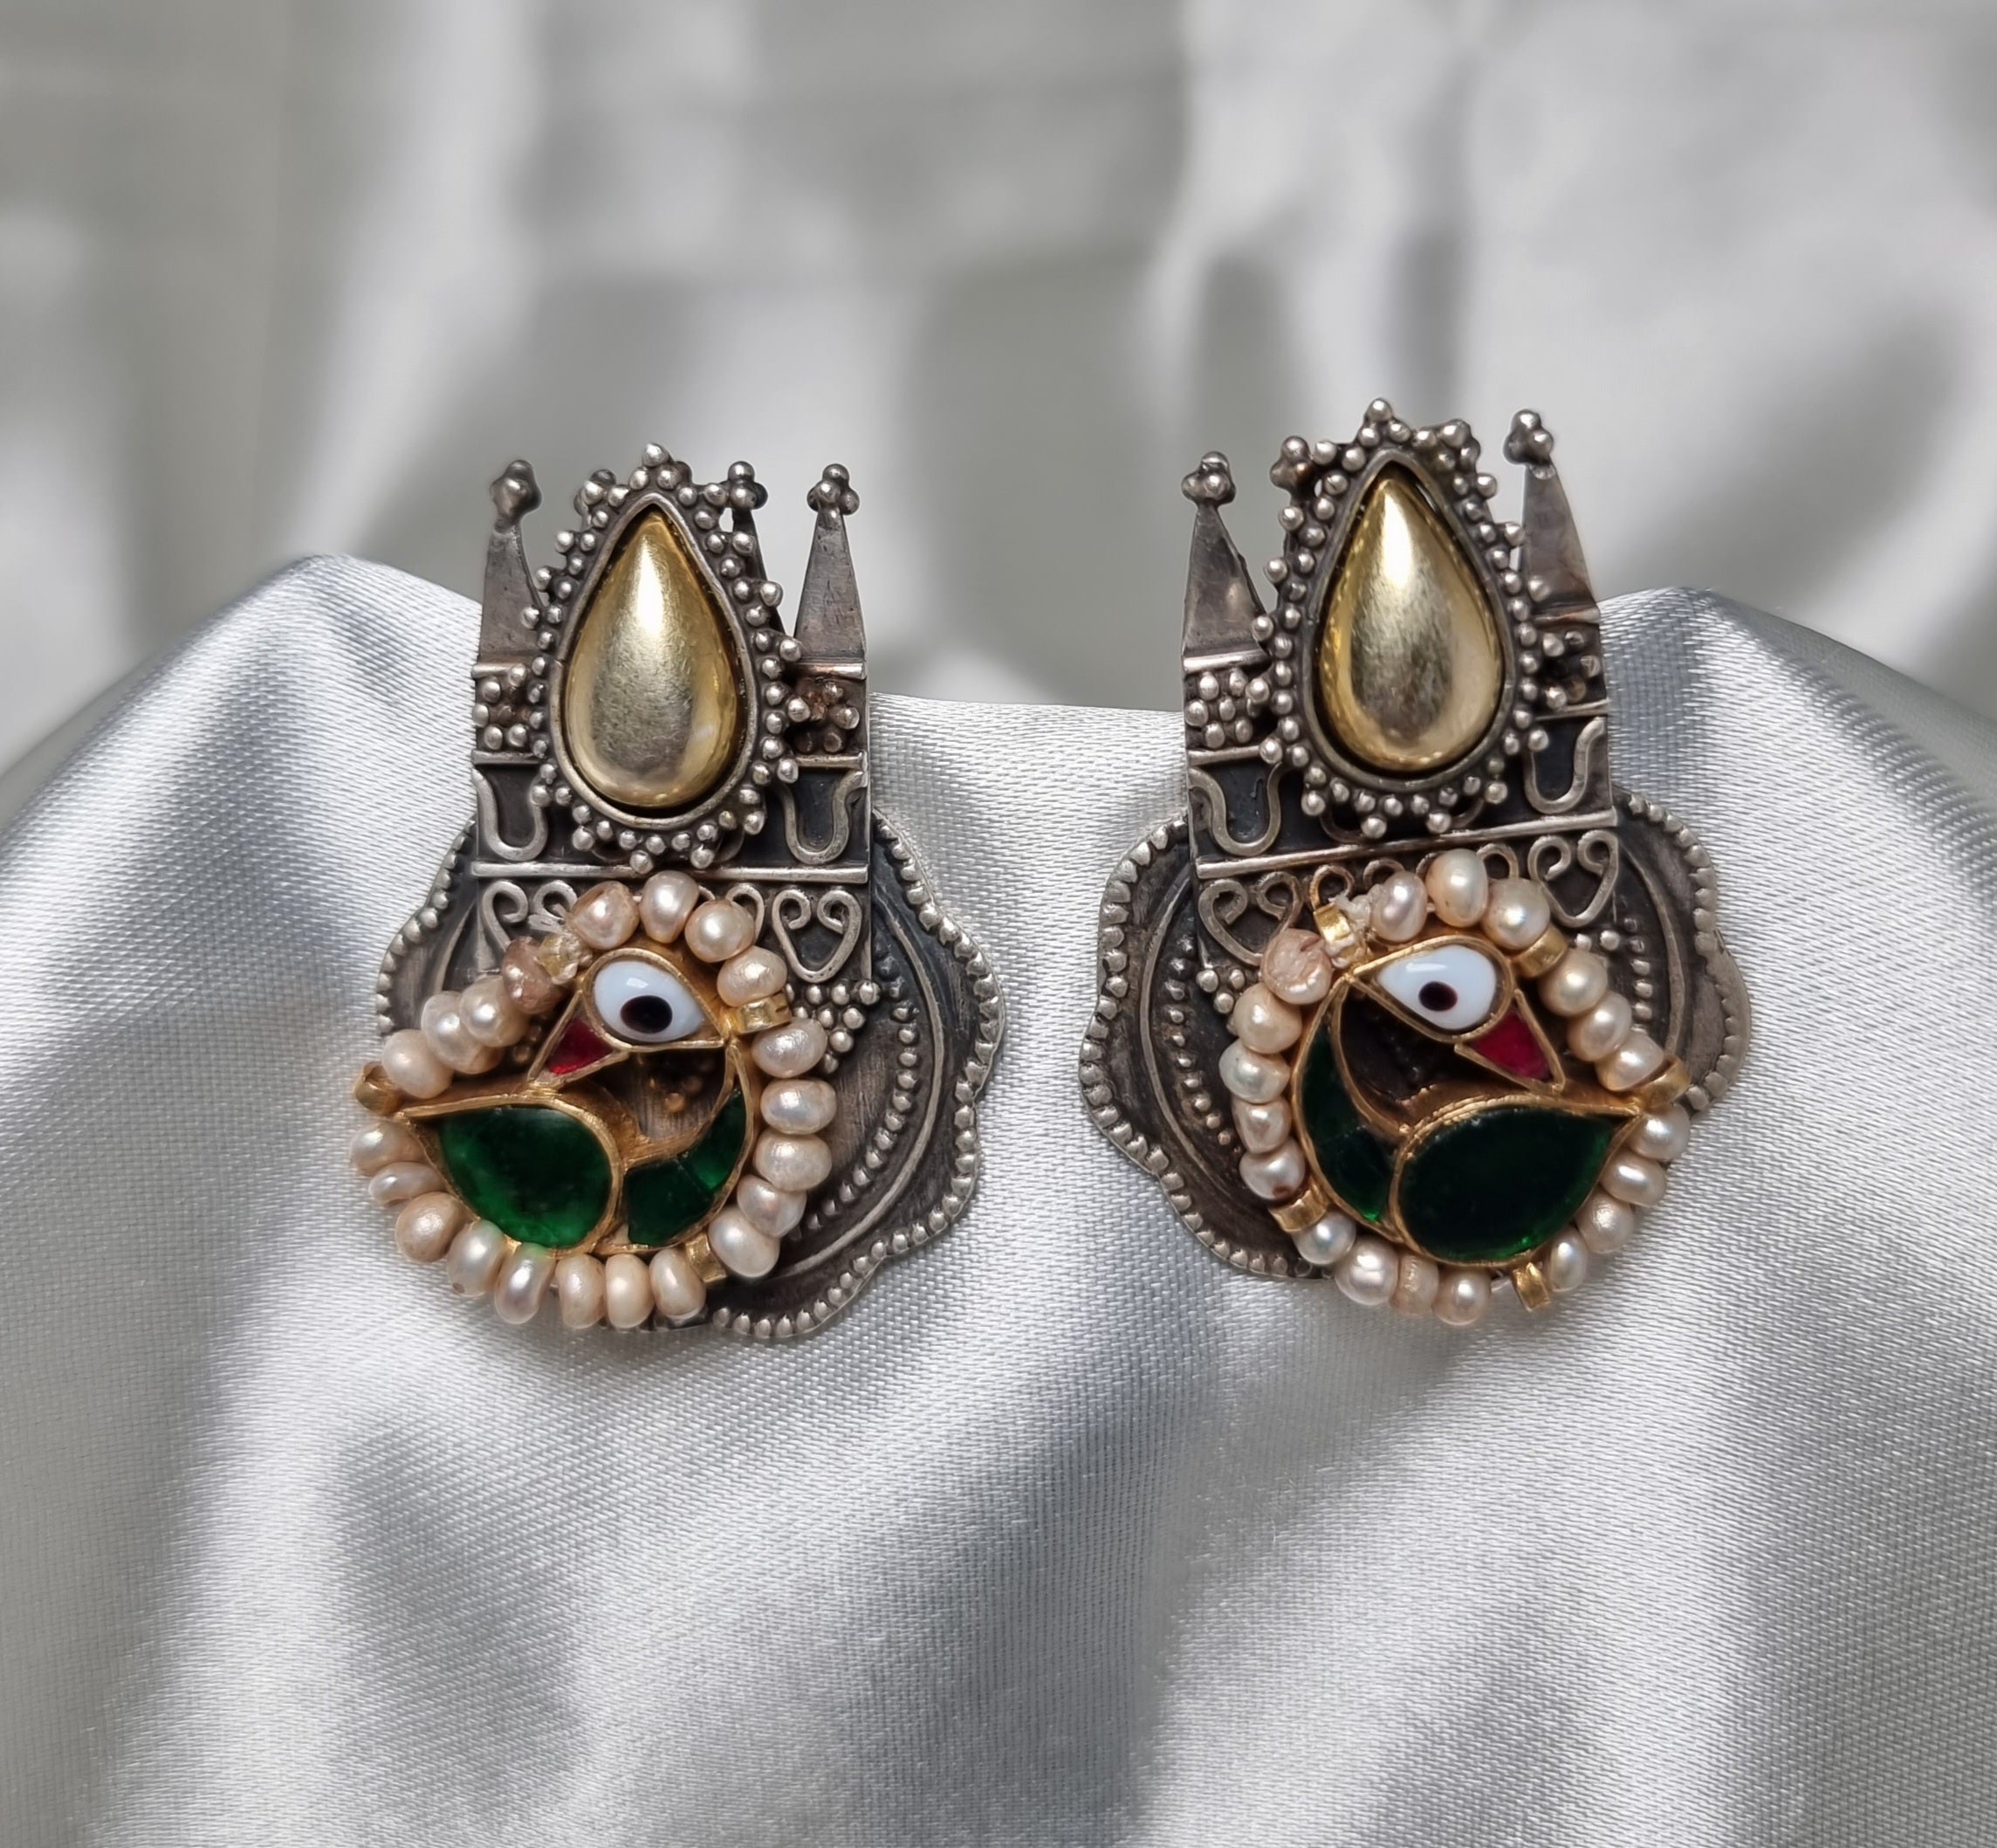 22K Gold Jhumkas (Buttalu) - Gold Dangle Earrings With Pearls - 235-GJH2047  in 10.300 Grams